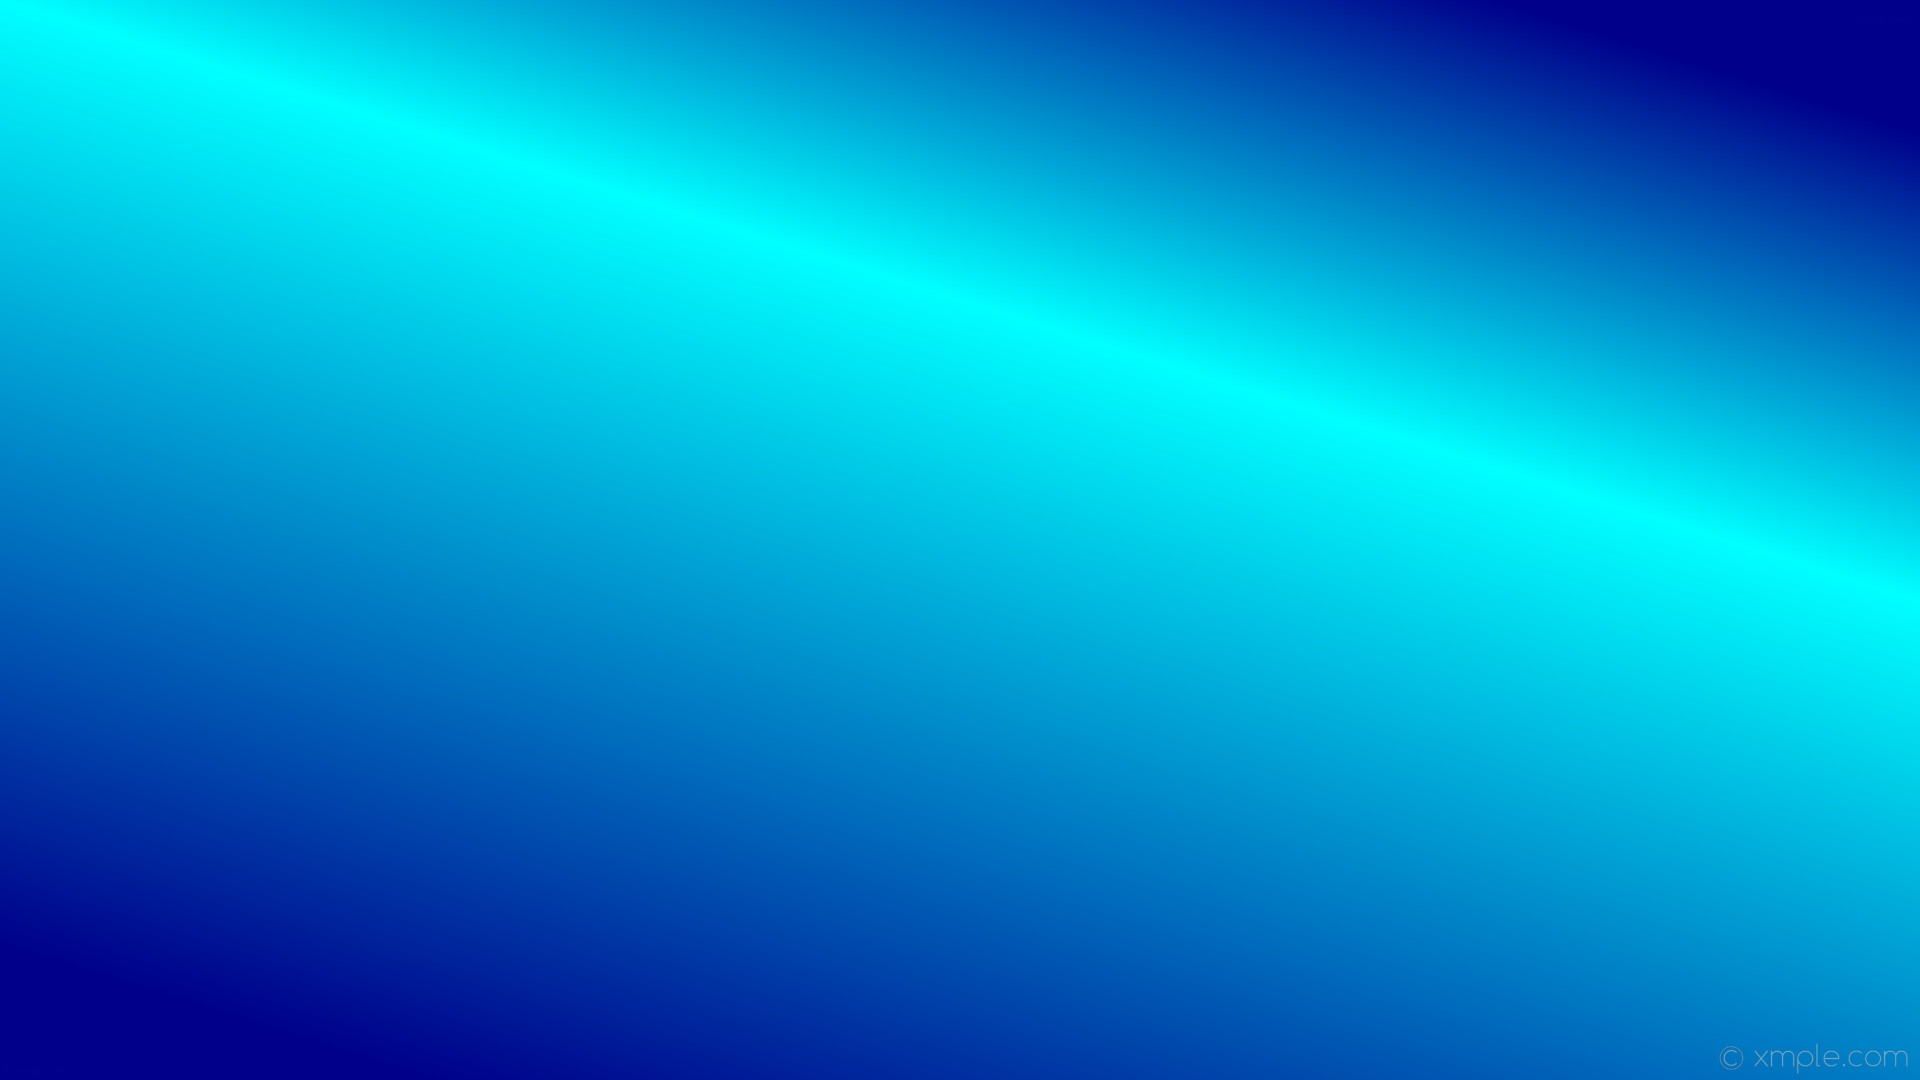 1920x1080 wallpaper highlight blue gradient linear dark blue aqua cyan #00008b  #00ffff 225Â° 67